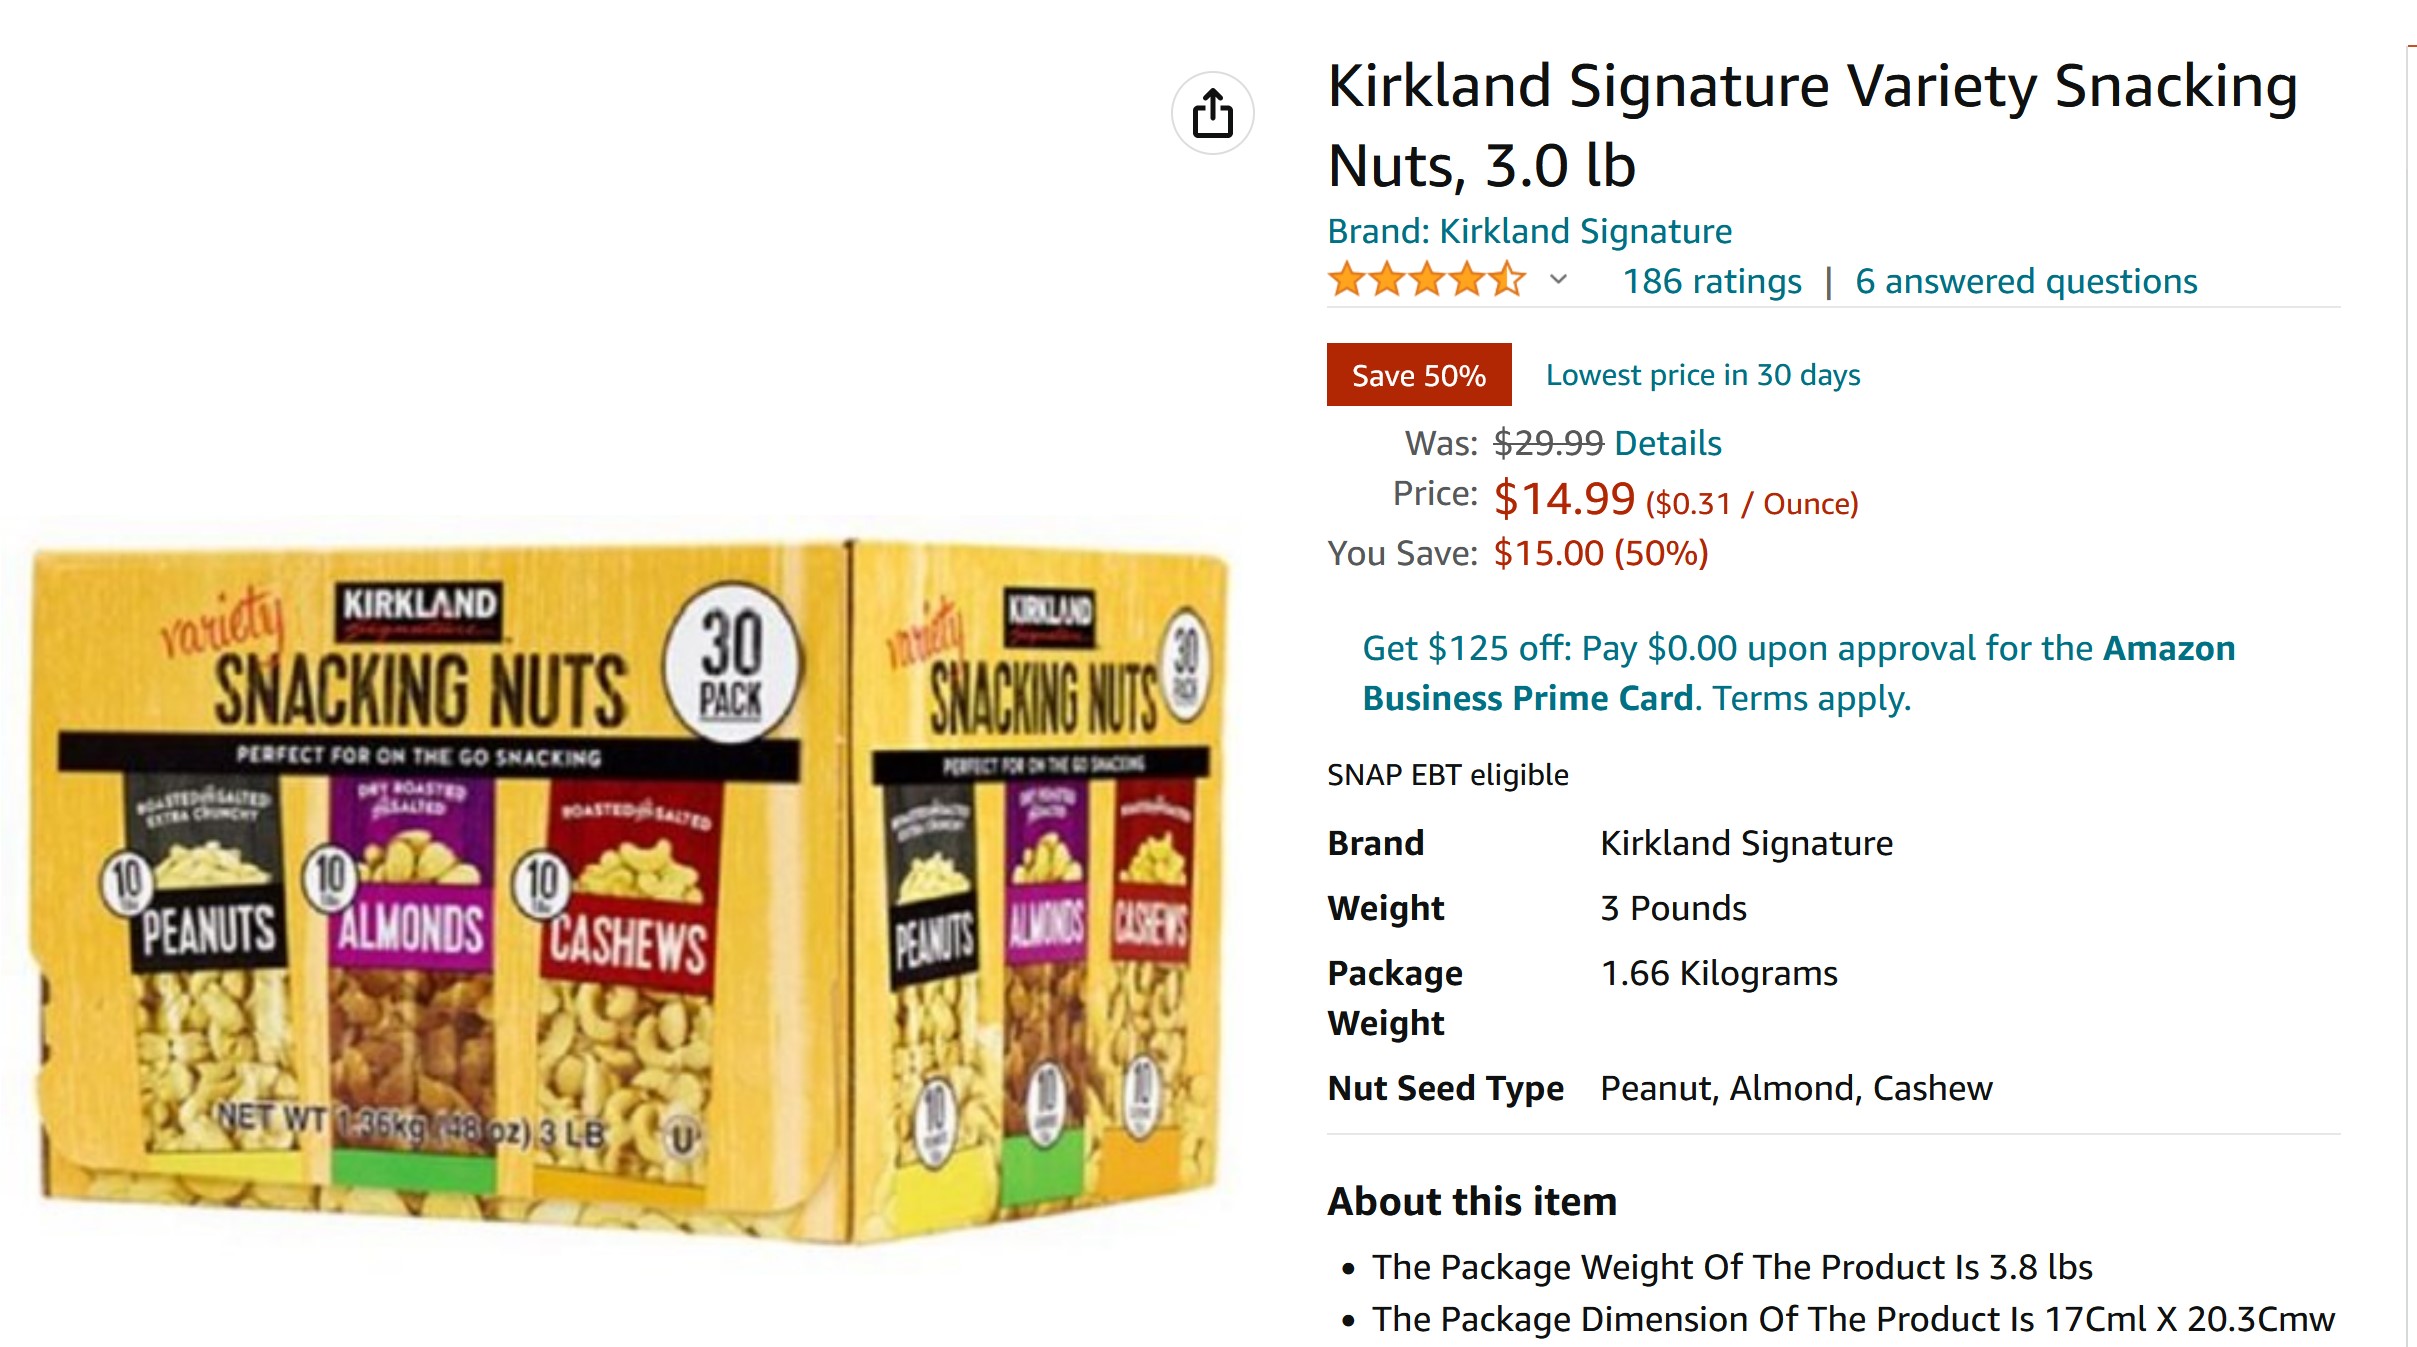 Amazon: Kirkland Signature Variety Snacking Nuts, 3.0 lb (30 packs, 1.6oz ea - 10x Peanuts, 10x Cashews, 10x Almonds) 50% Off, Free Prime Shipping $14.99